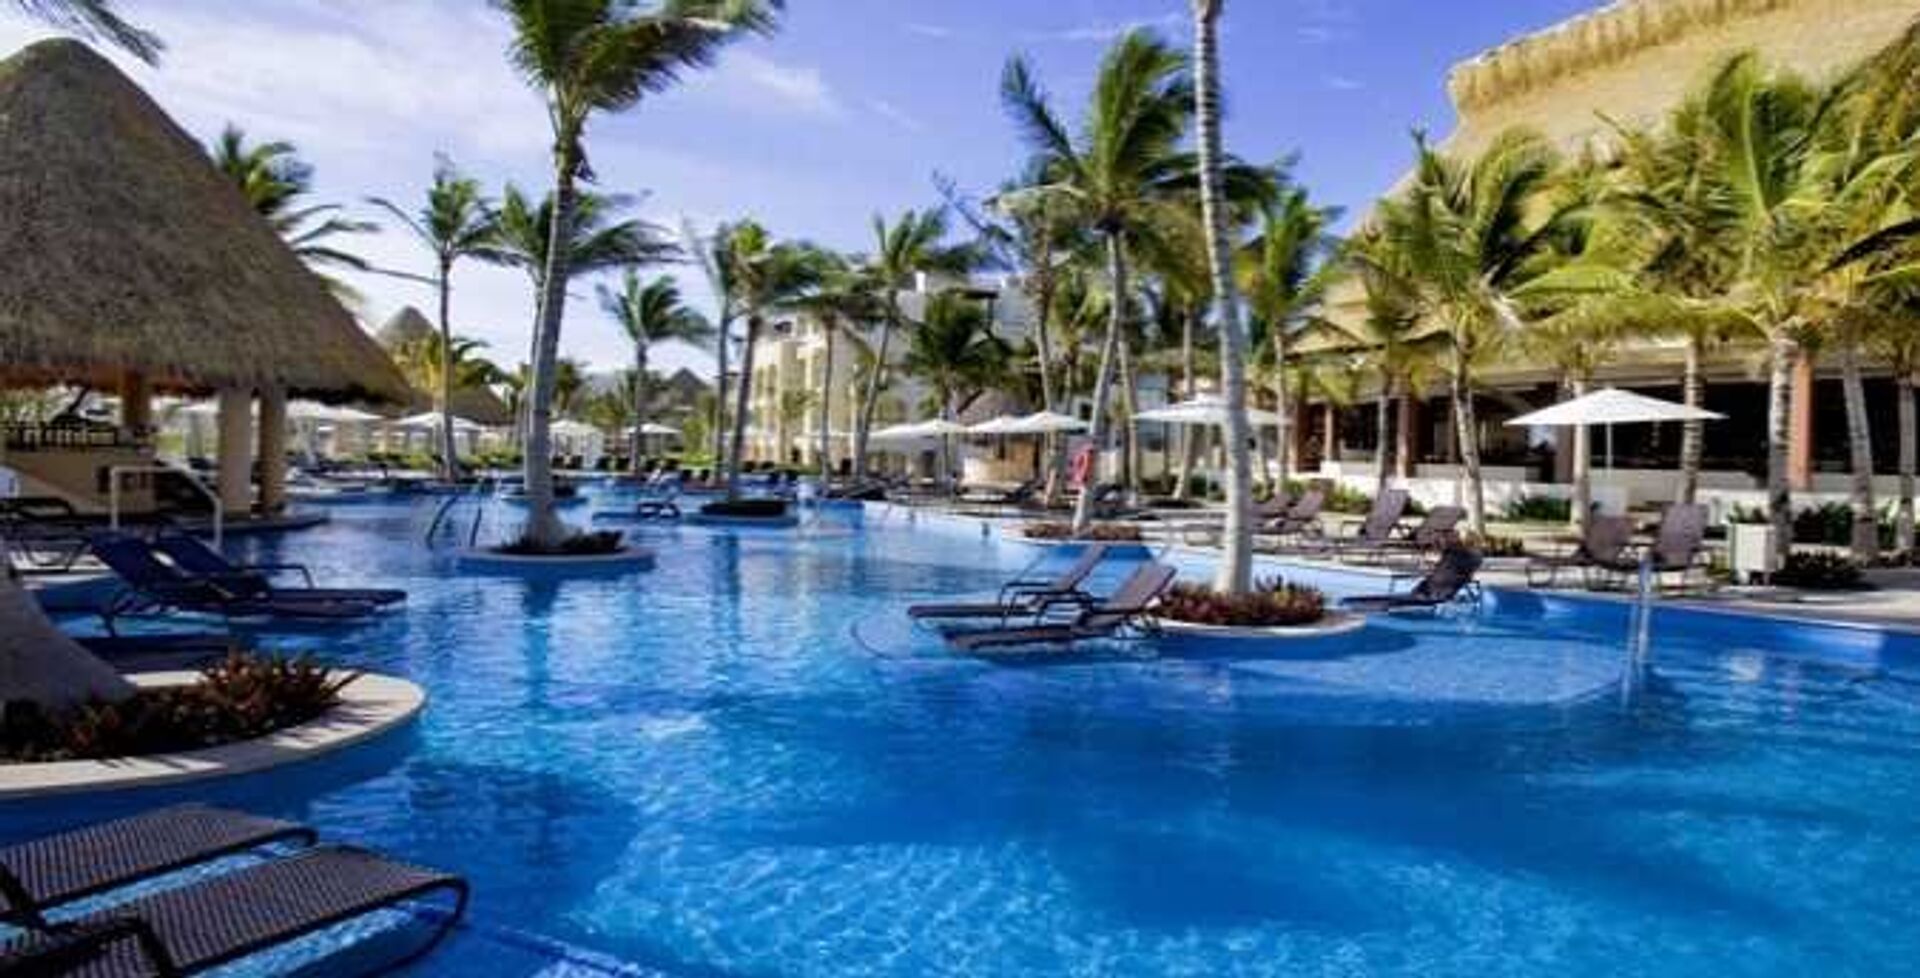 #Отель Moon Palace Casino, Golf & Spa Resort, ставший Hard Rock Hotel & Casino Punta Cana - ПРАЙМ, 1920, 01.10.2021